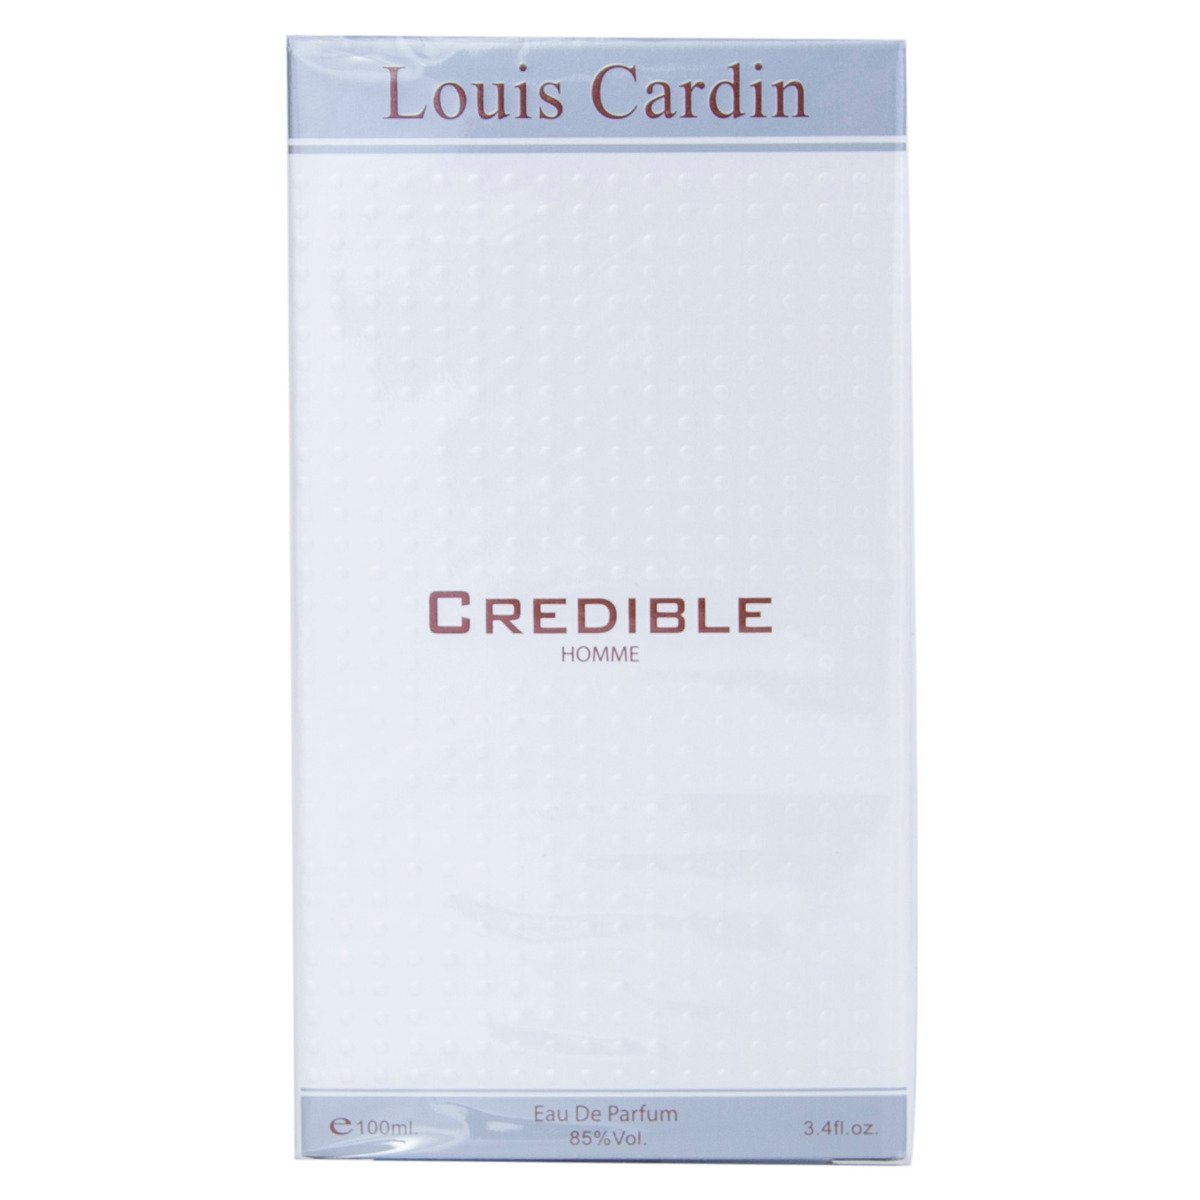 Perfume for men - Louis Cardin Credible Homme